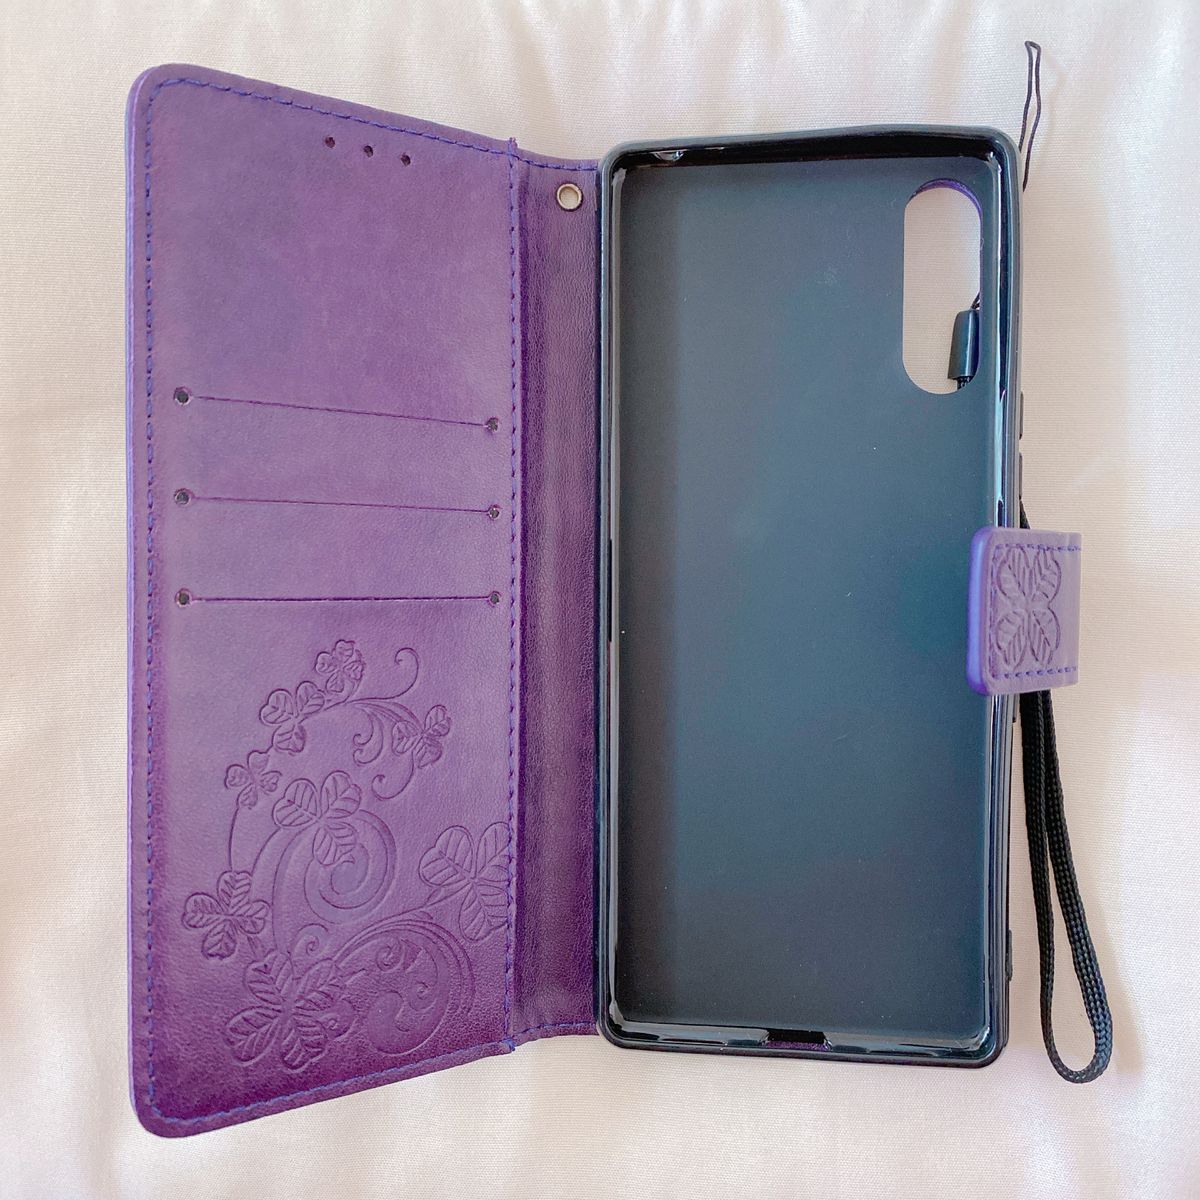 RuiMi Moto G8 Power 手帳型ケース 紫 クローバー 手帳型 革 可愛い おしゃれ カード収納